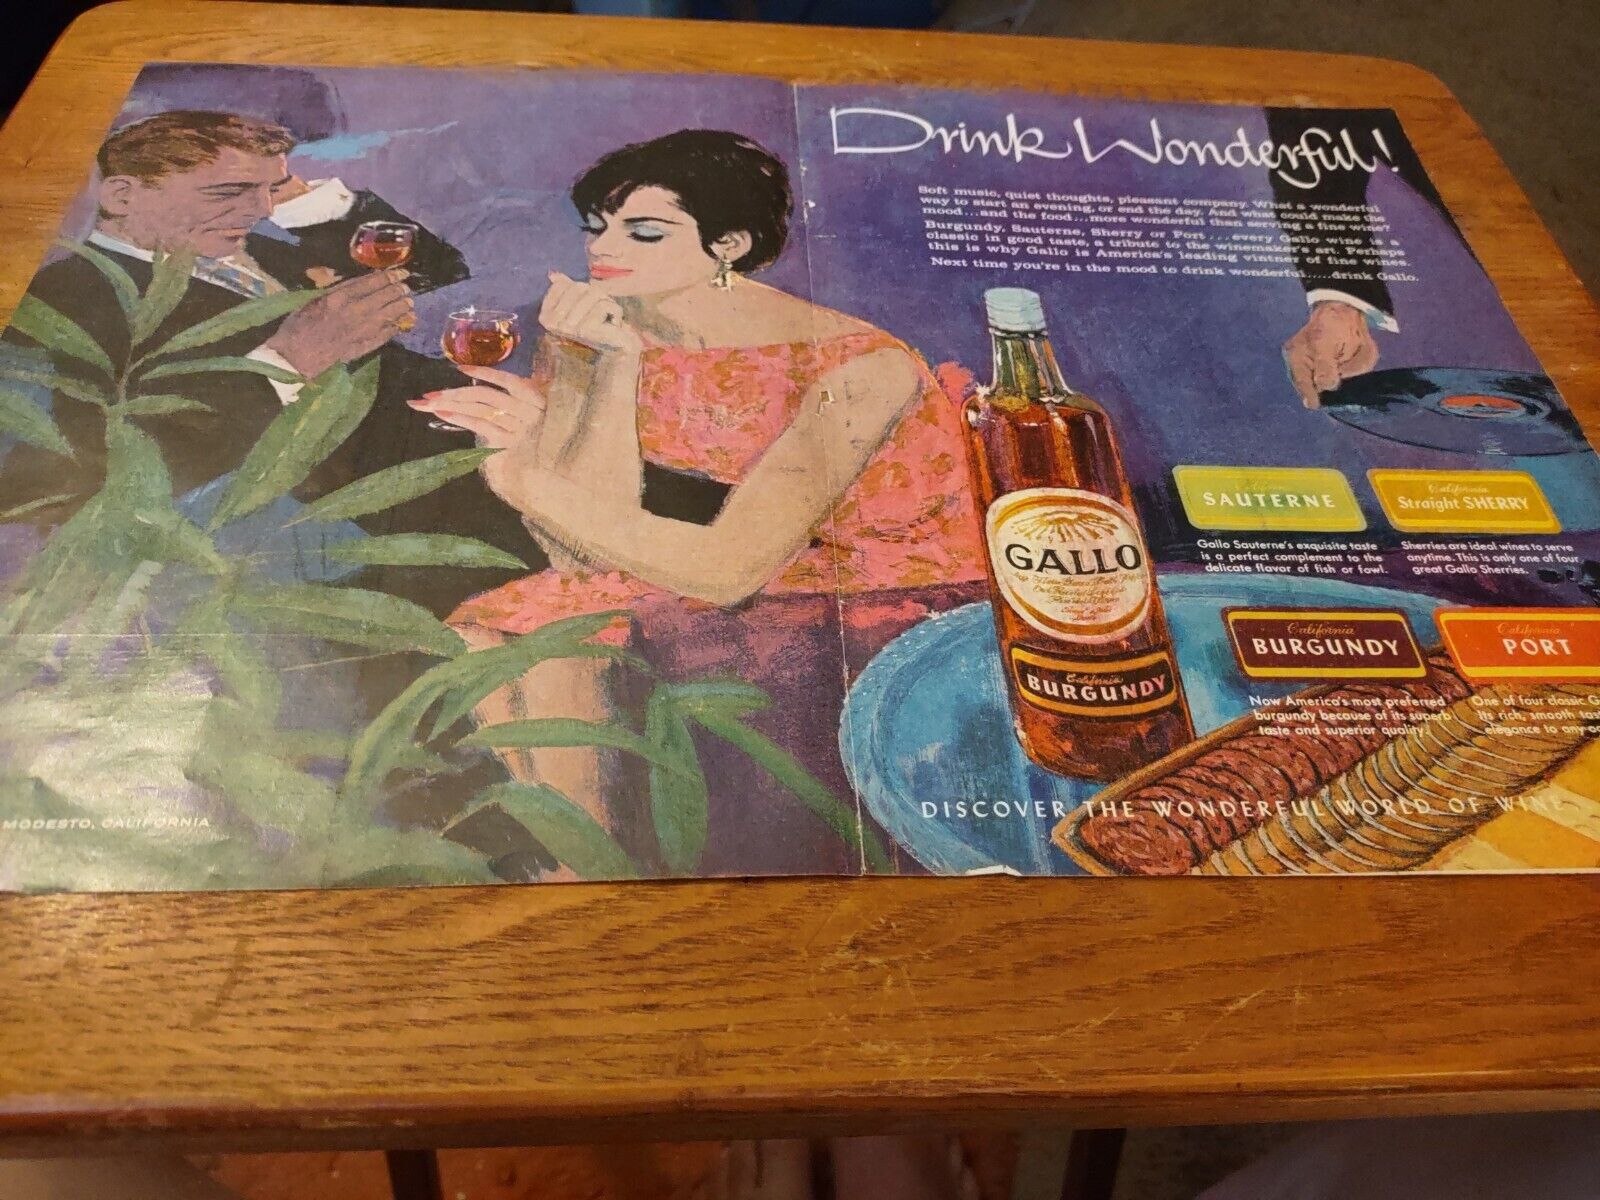 1962 Gallo Drink Wonderful Magazine Ad